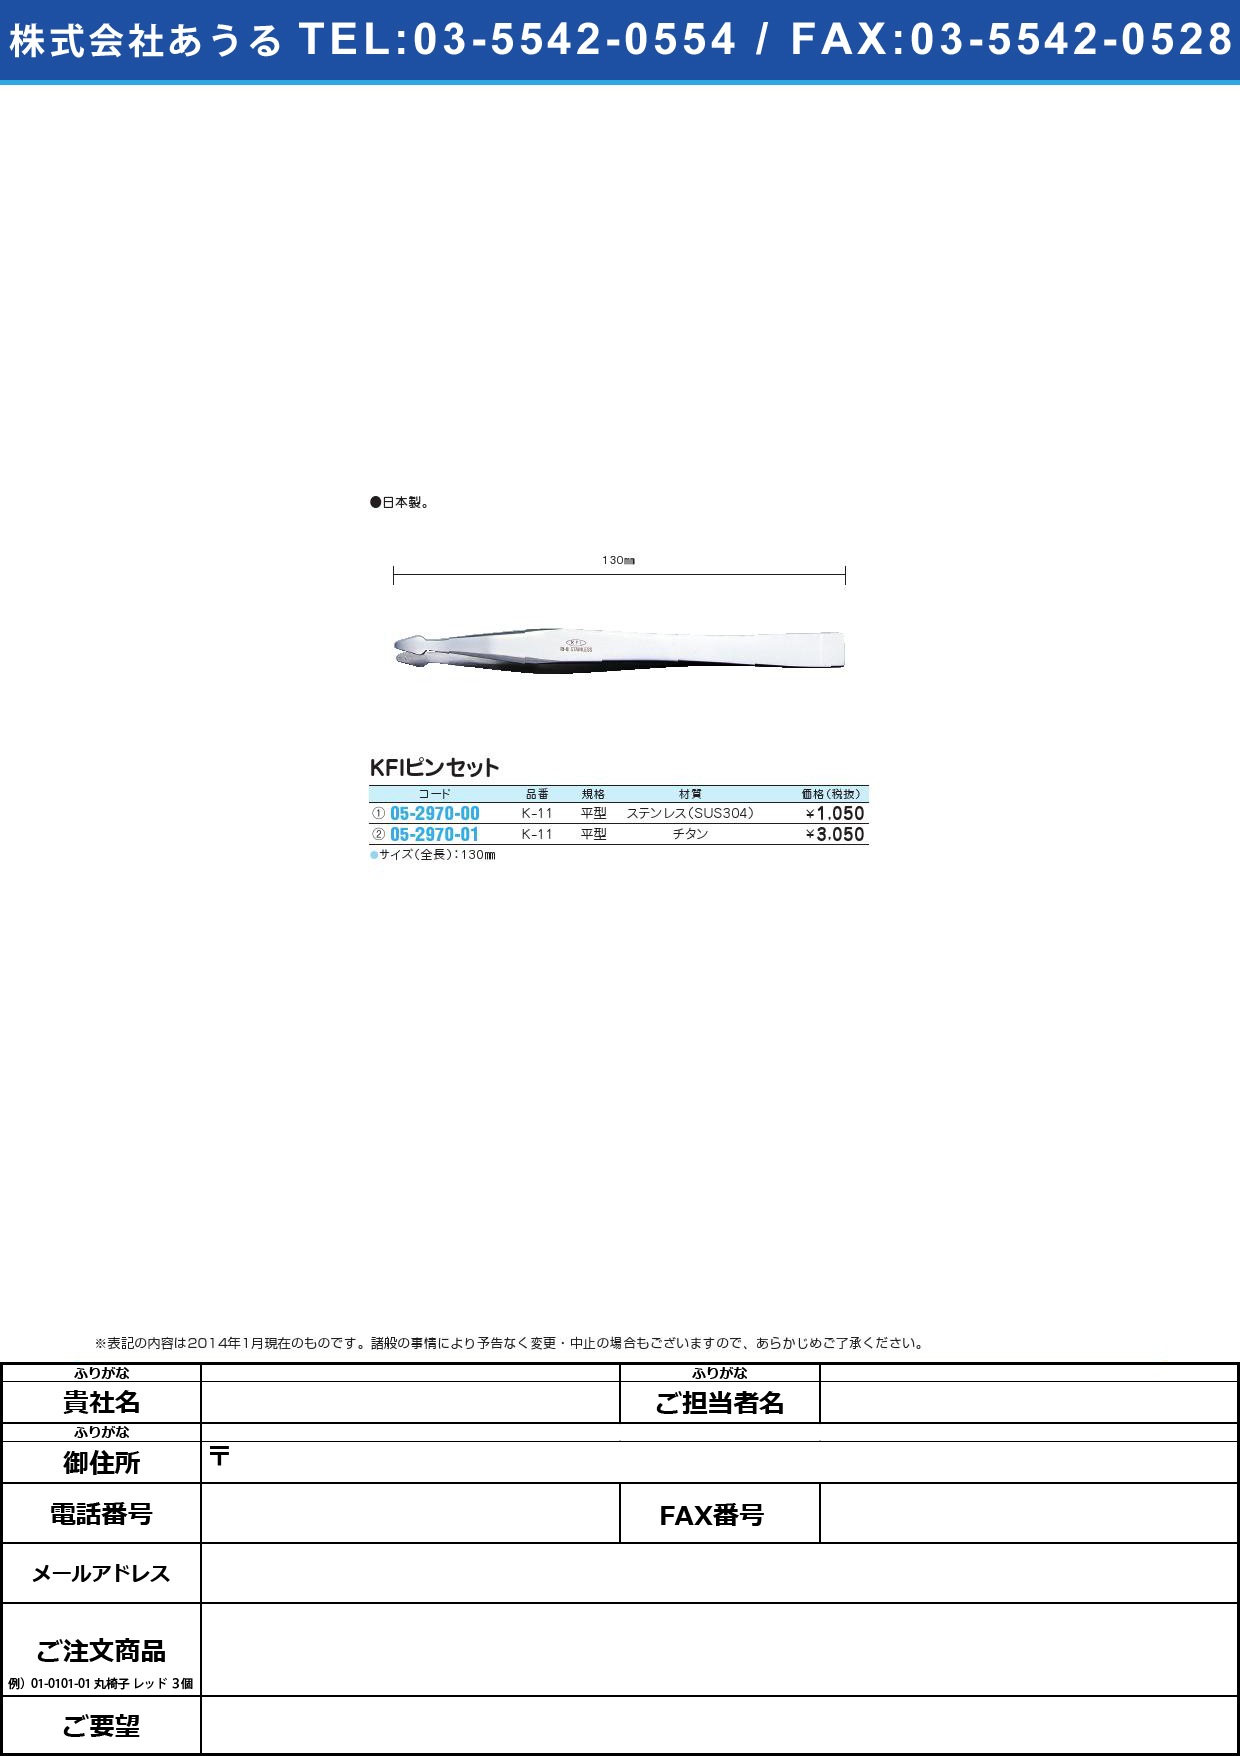 ＫＦＩピンセット 平型 ﾋﾟﾝｾｯﾄ(05-2970-01)K-11 (ﾁﾀﾝ) 130MM